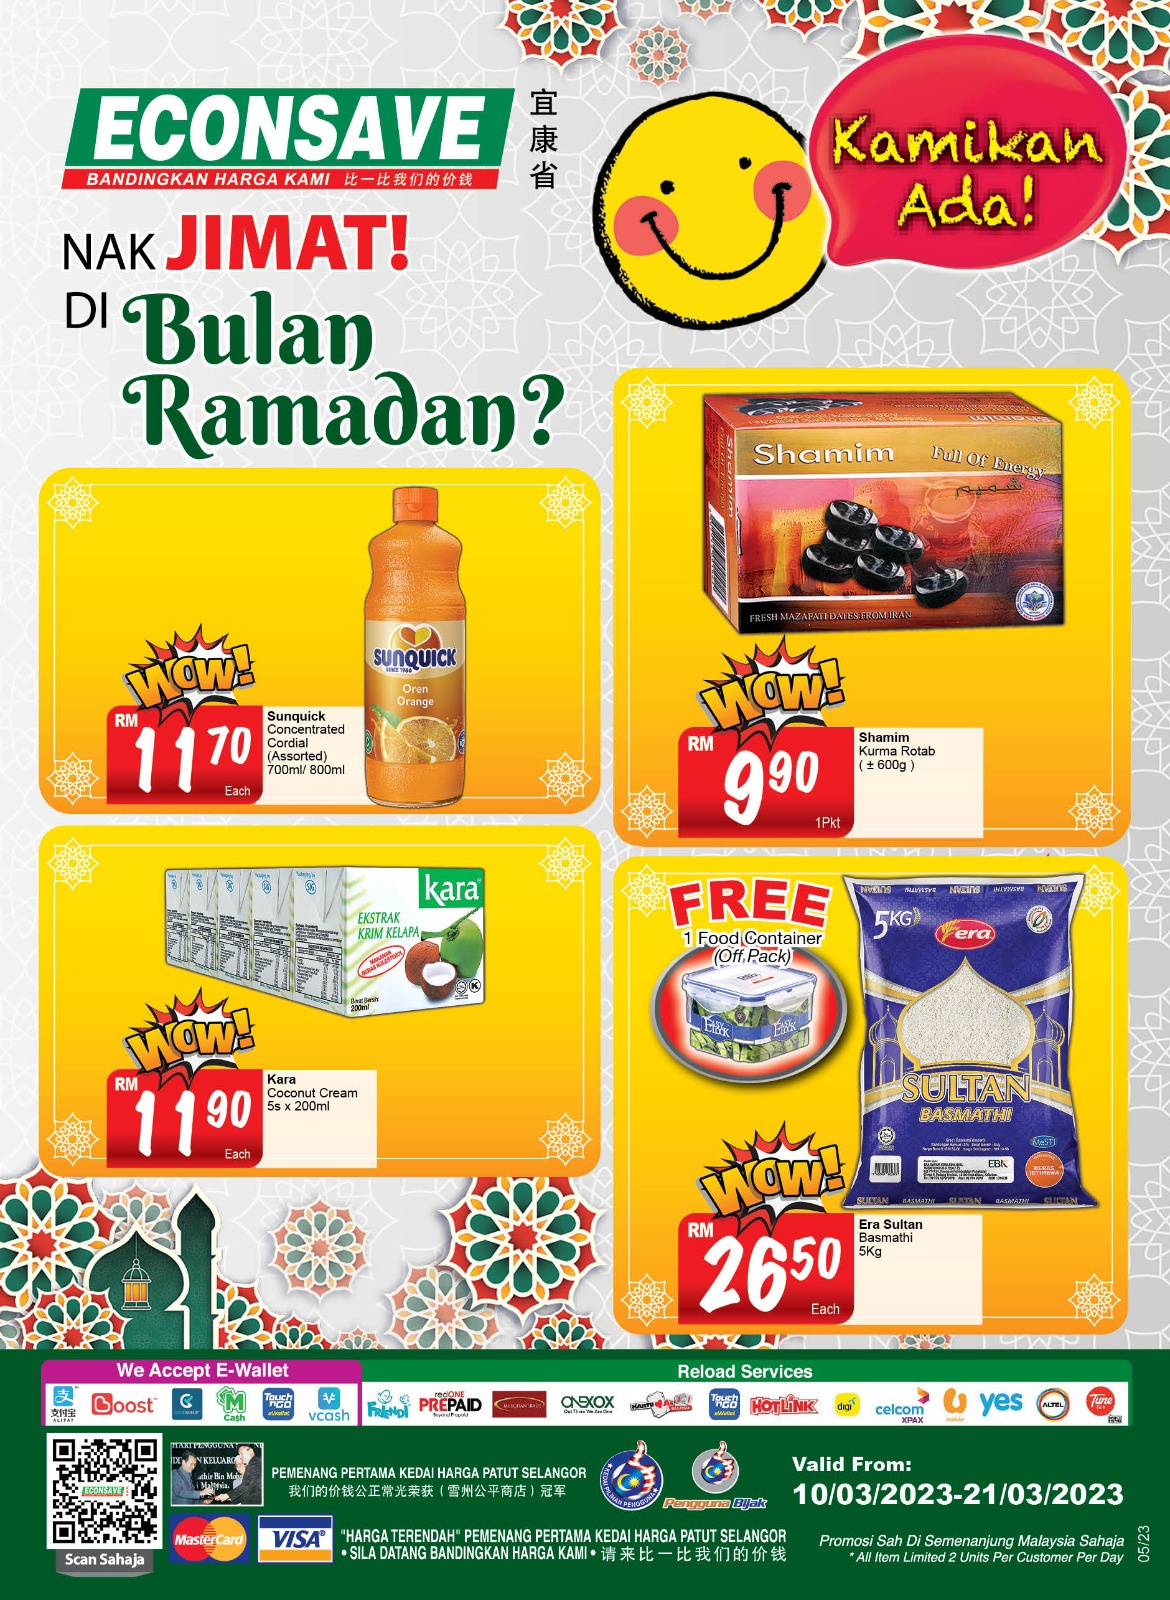 Econsave Ramadan Promo